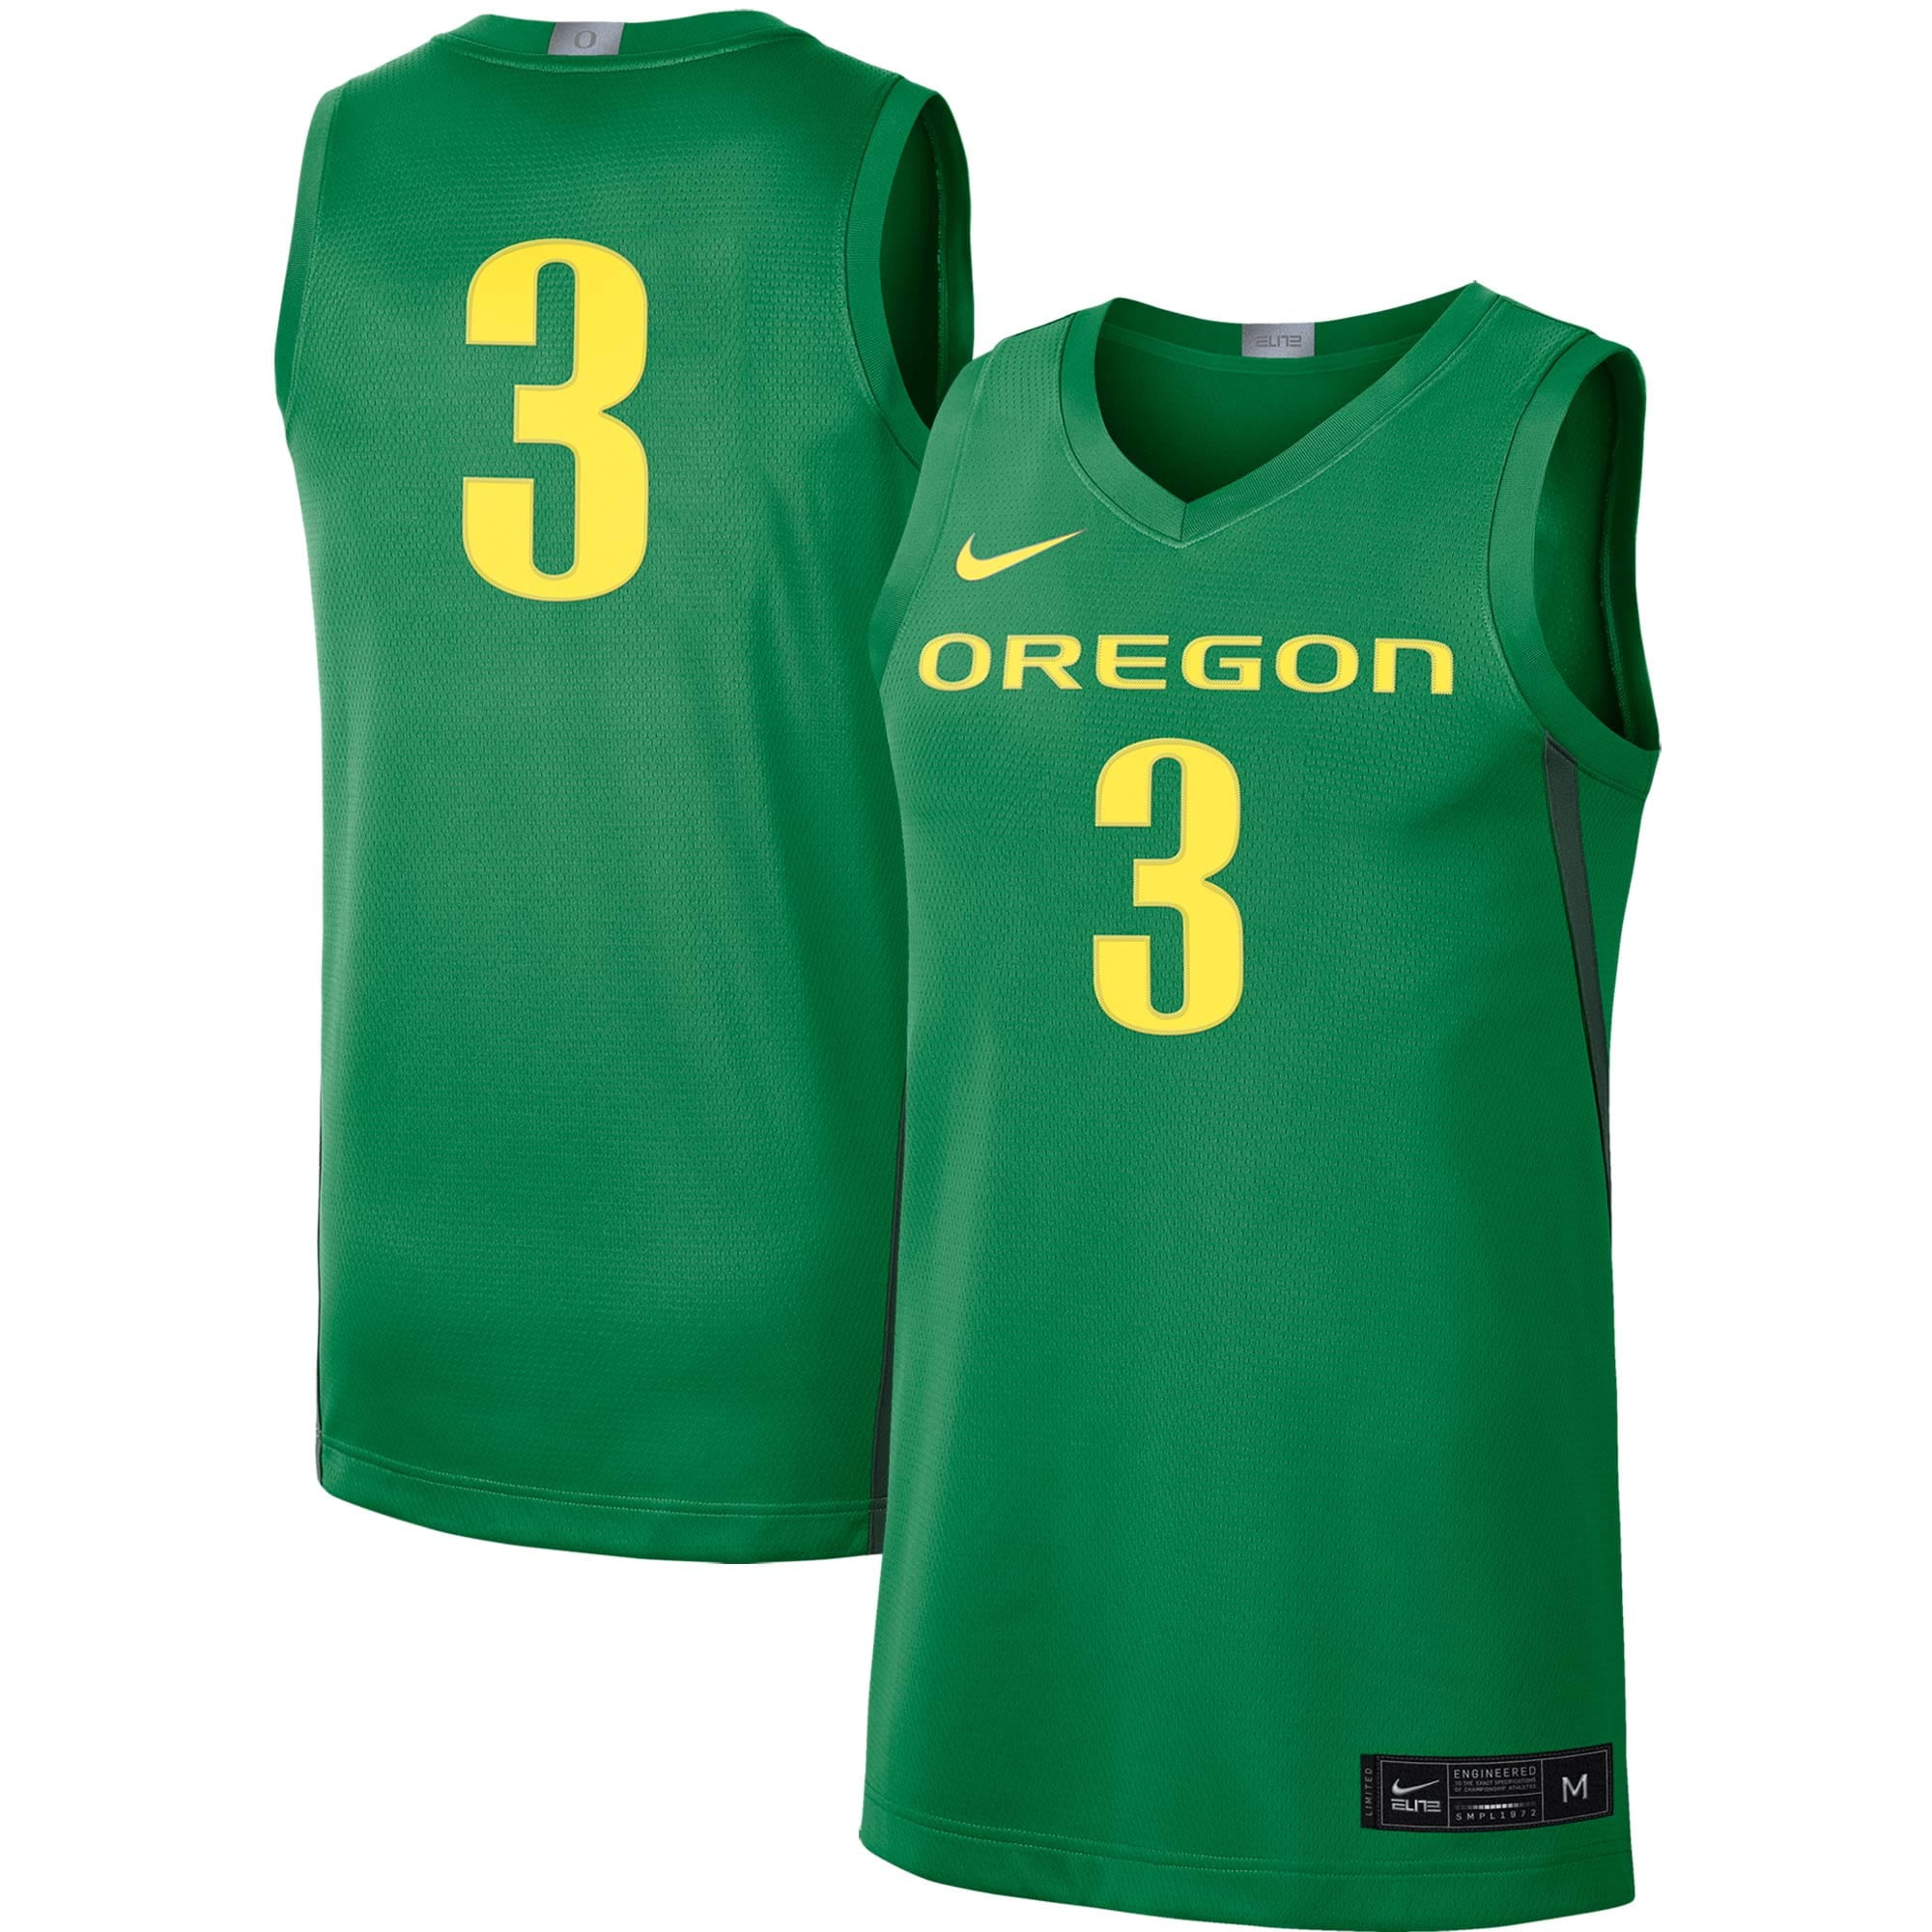 3 Oregon Ducks Nike Limited Basketball 